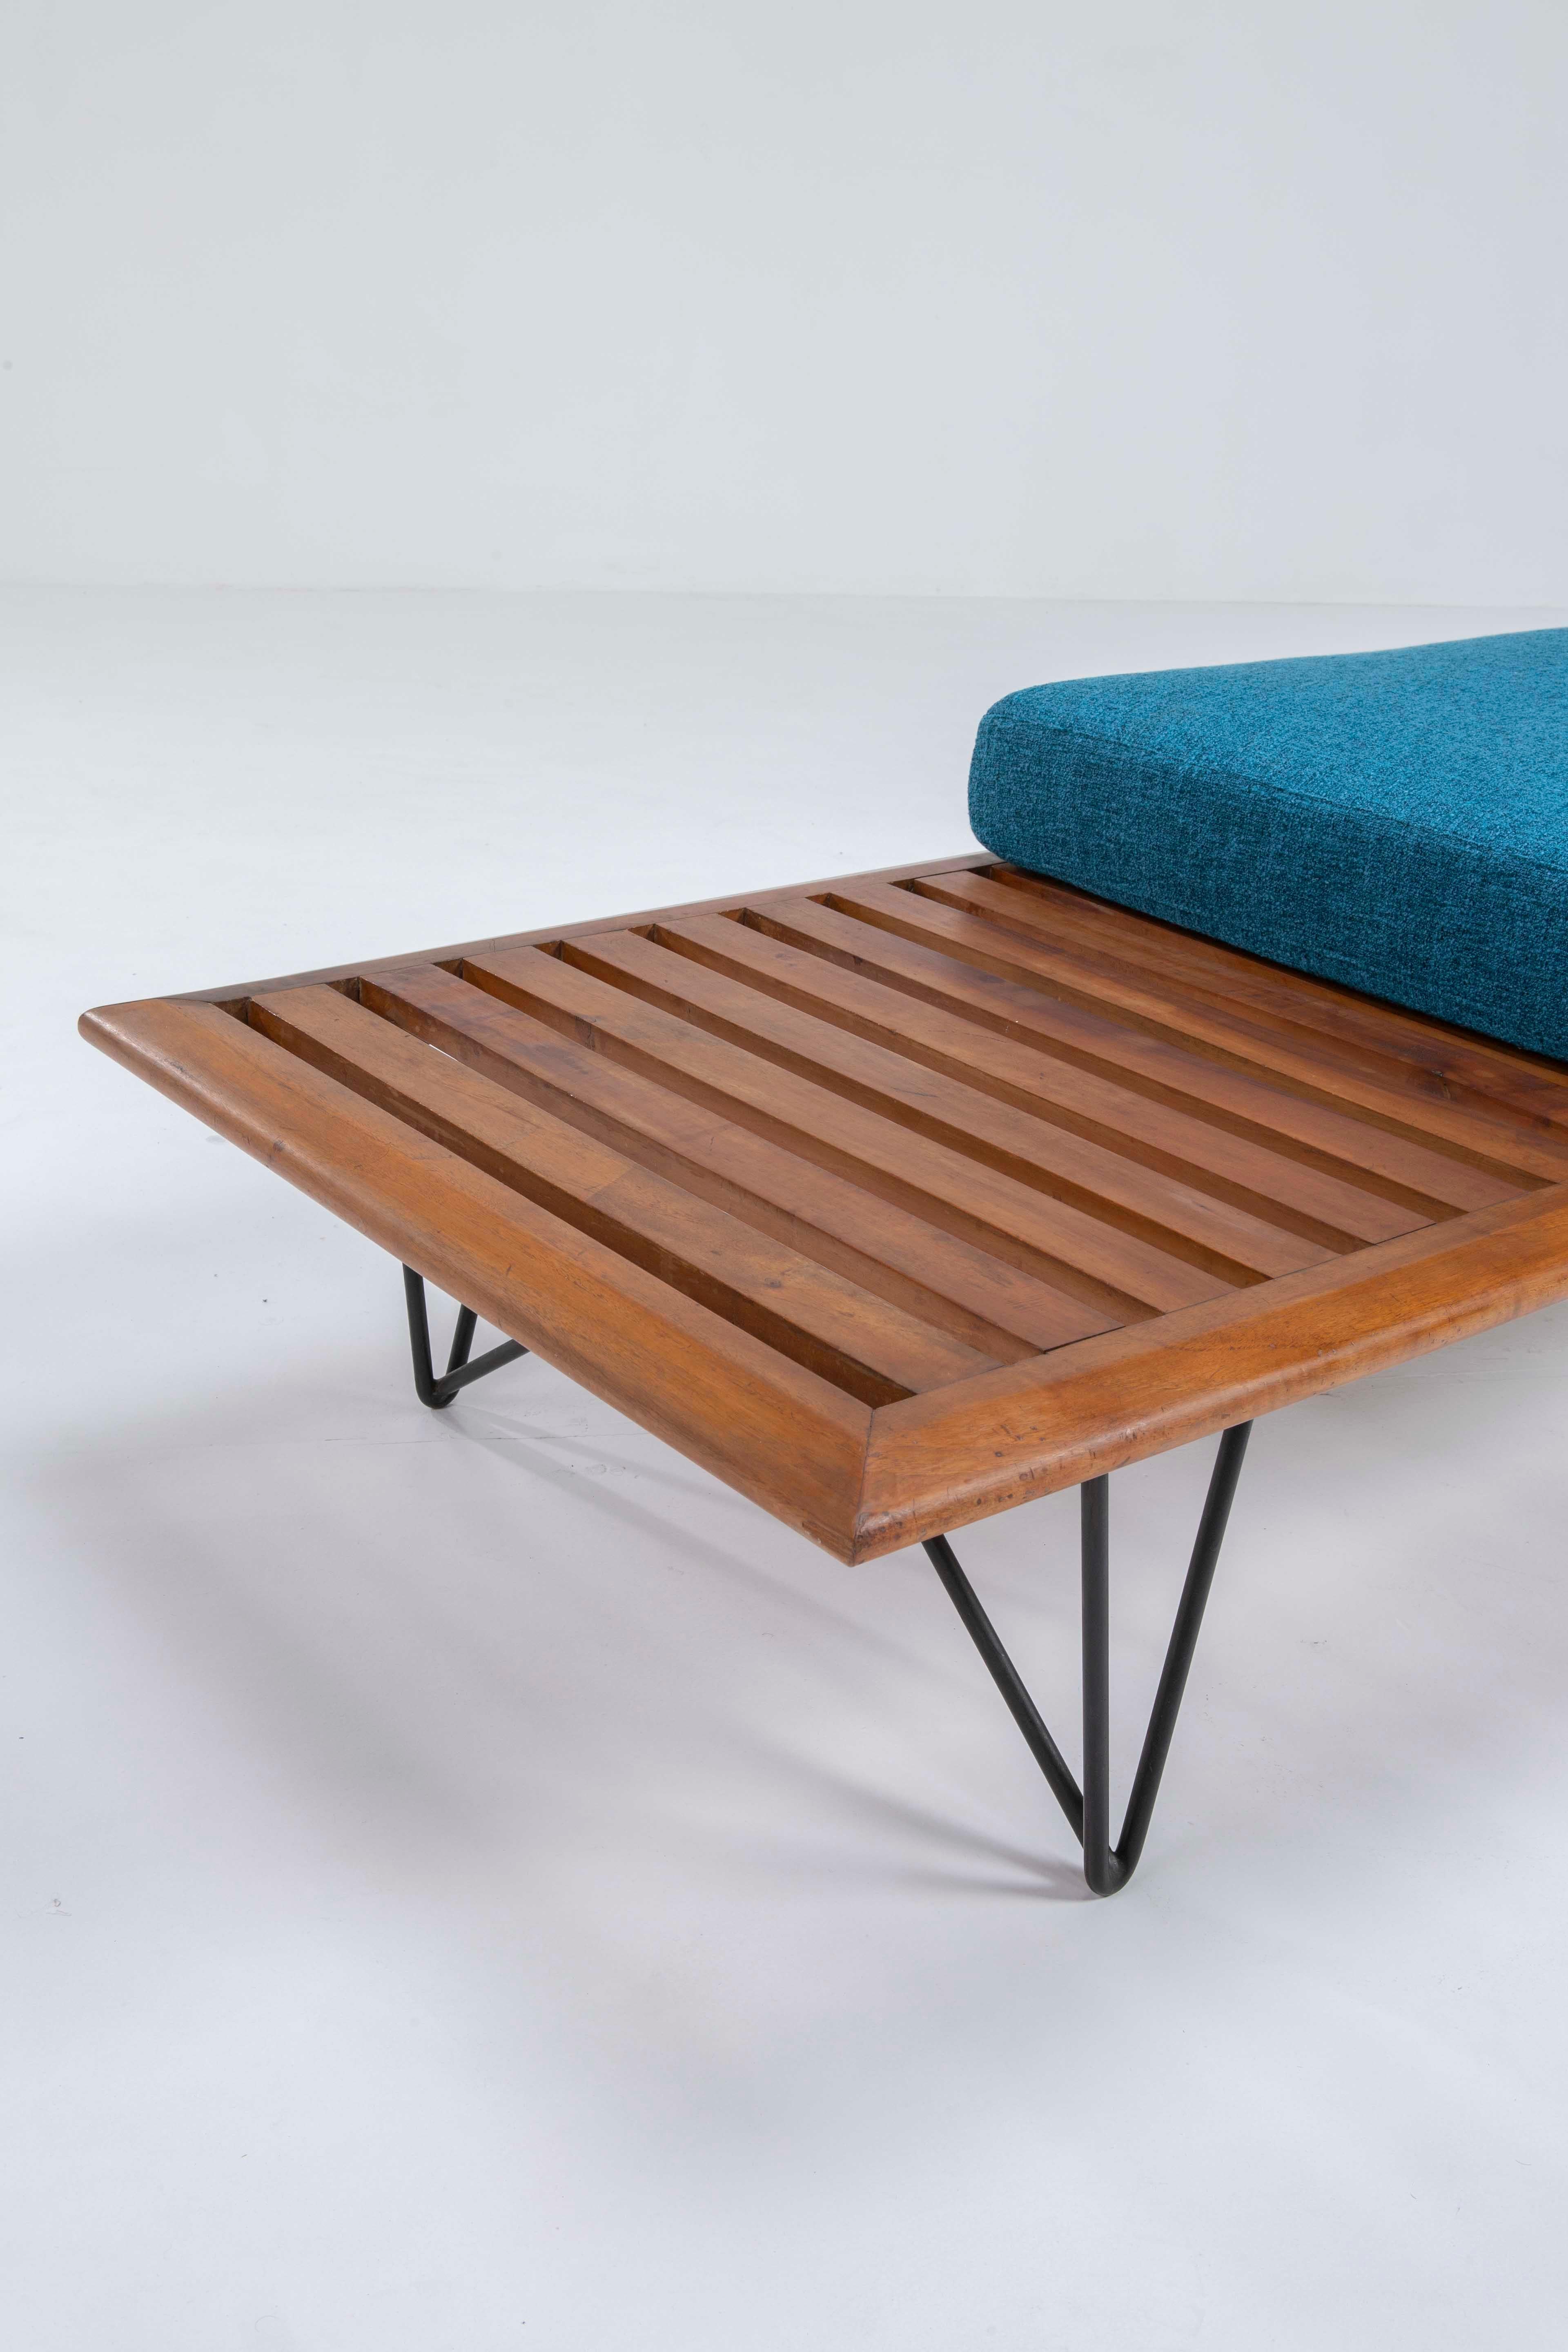 Carlo Hauner and Martin Eisler Rare bench - 1950s Italian Scandinavian Design For Sale 1